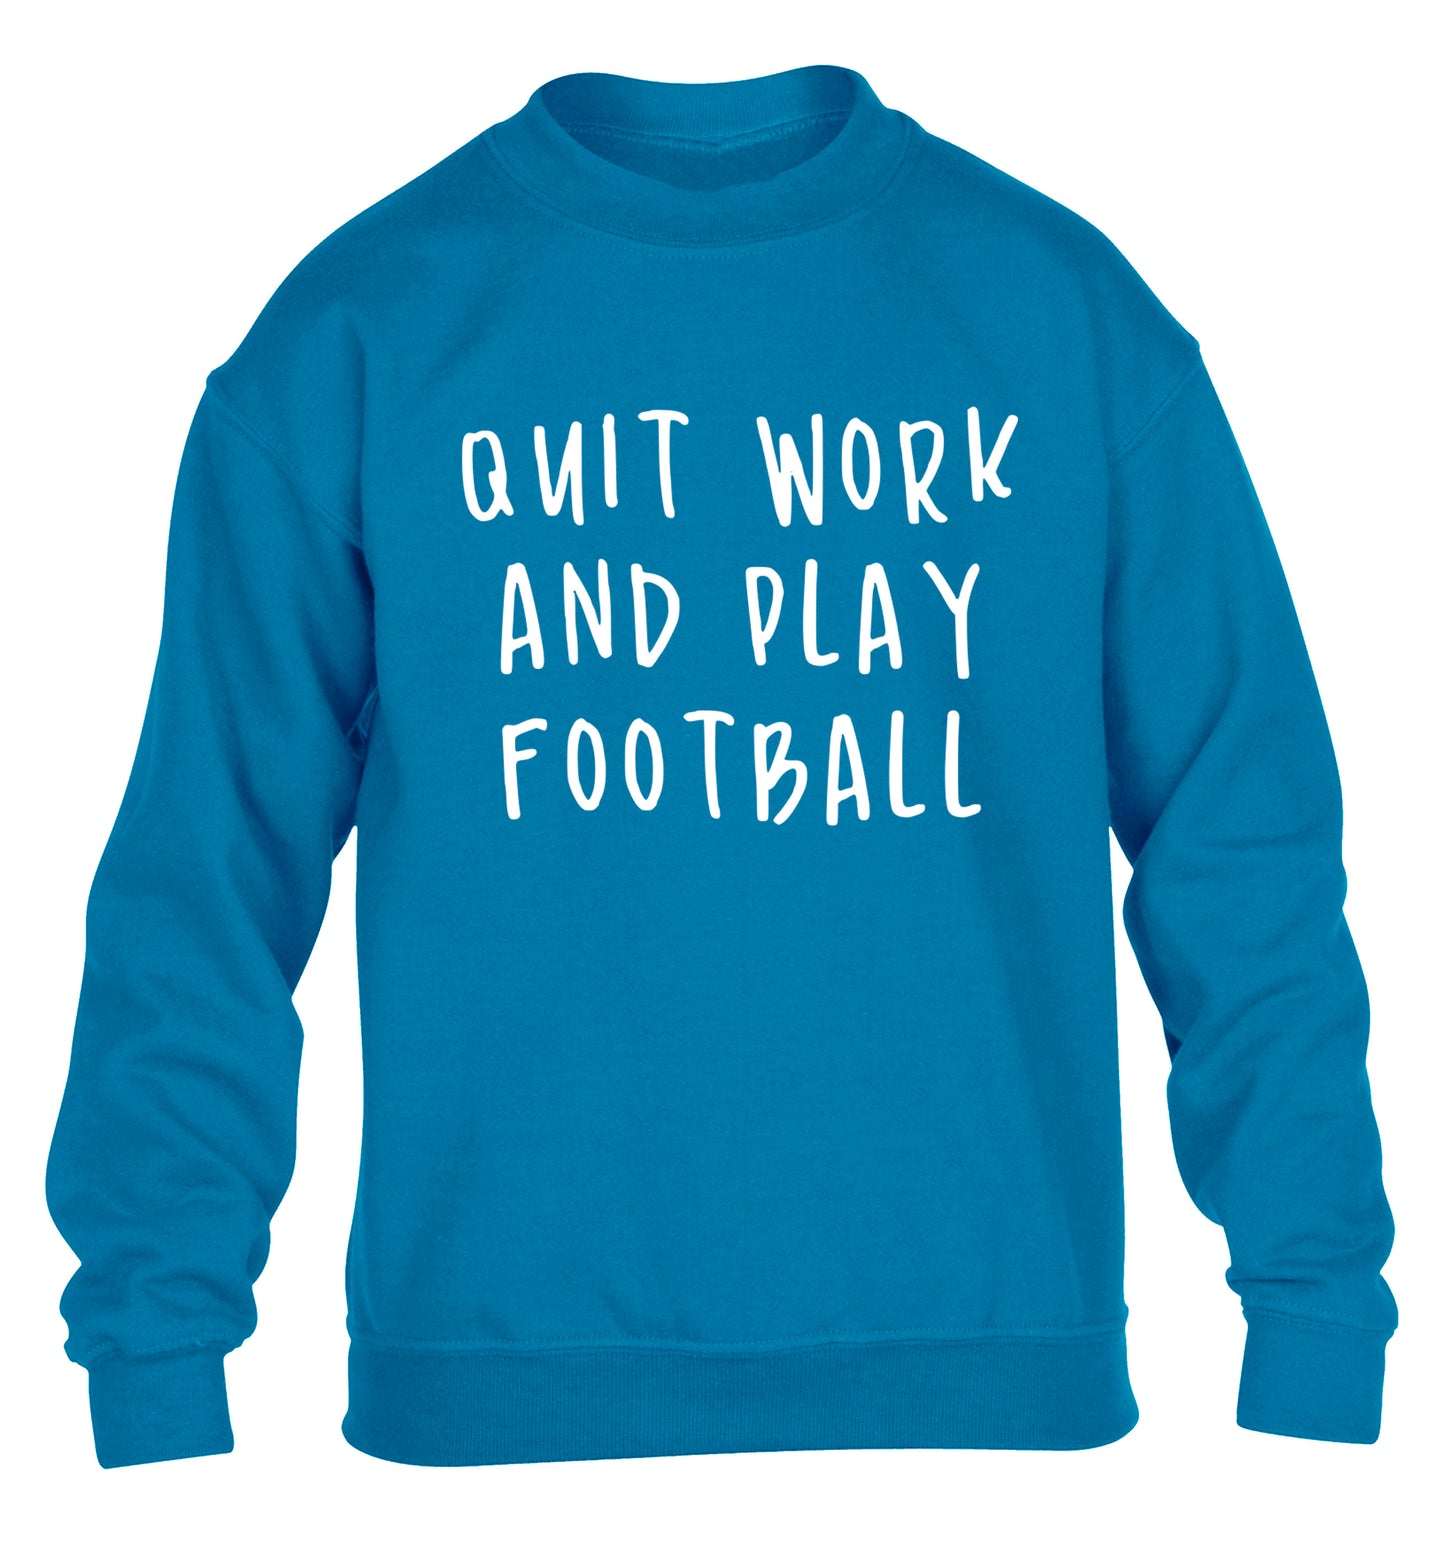 Quit work play football children's blue sweater 12-14 Years